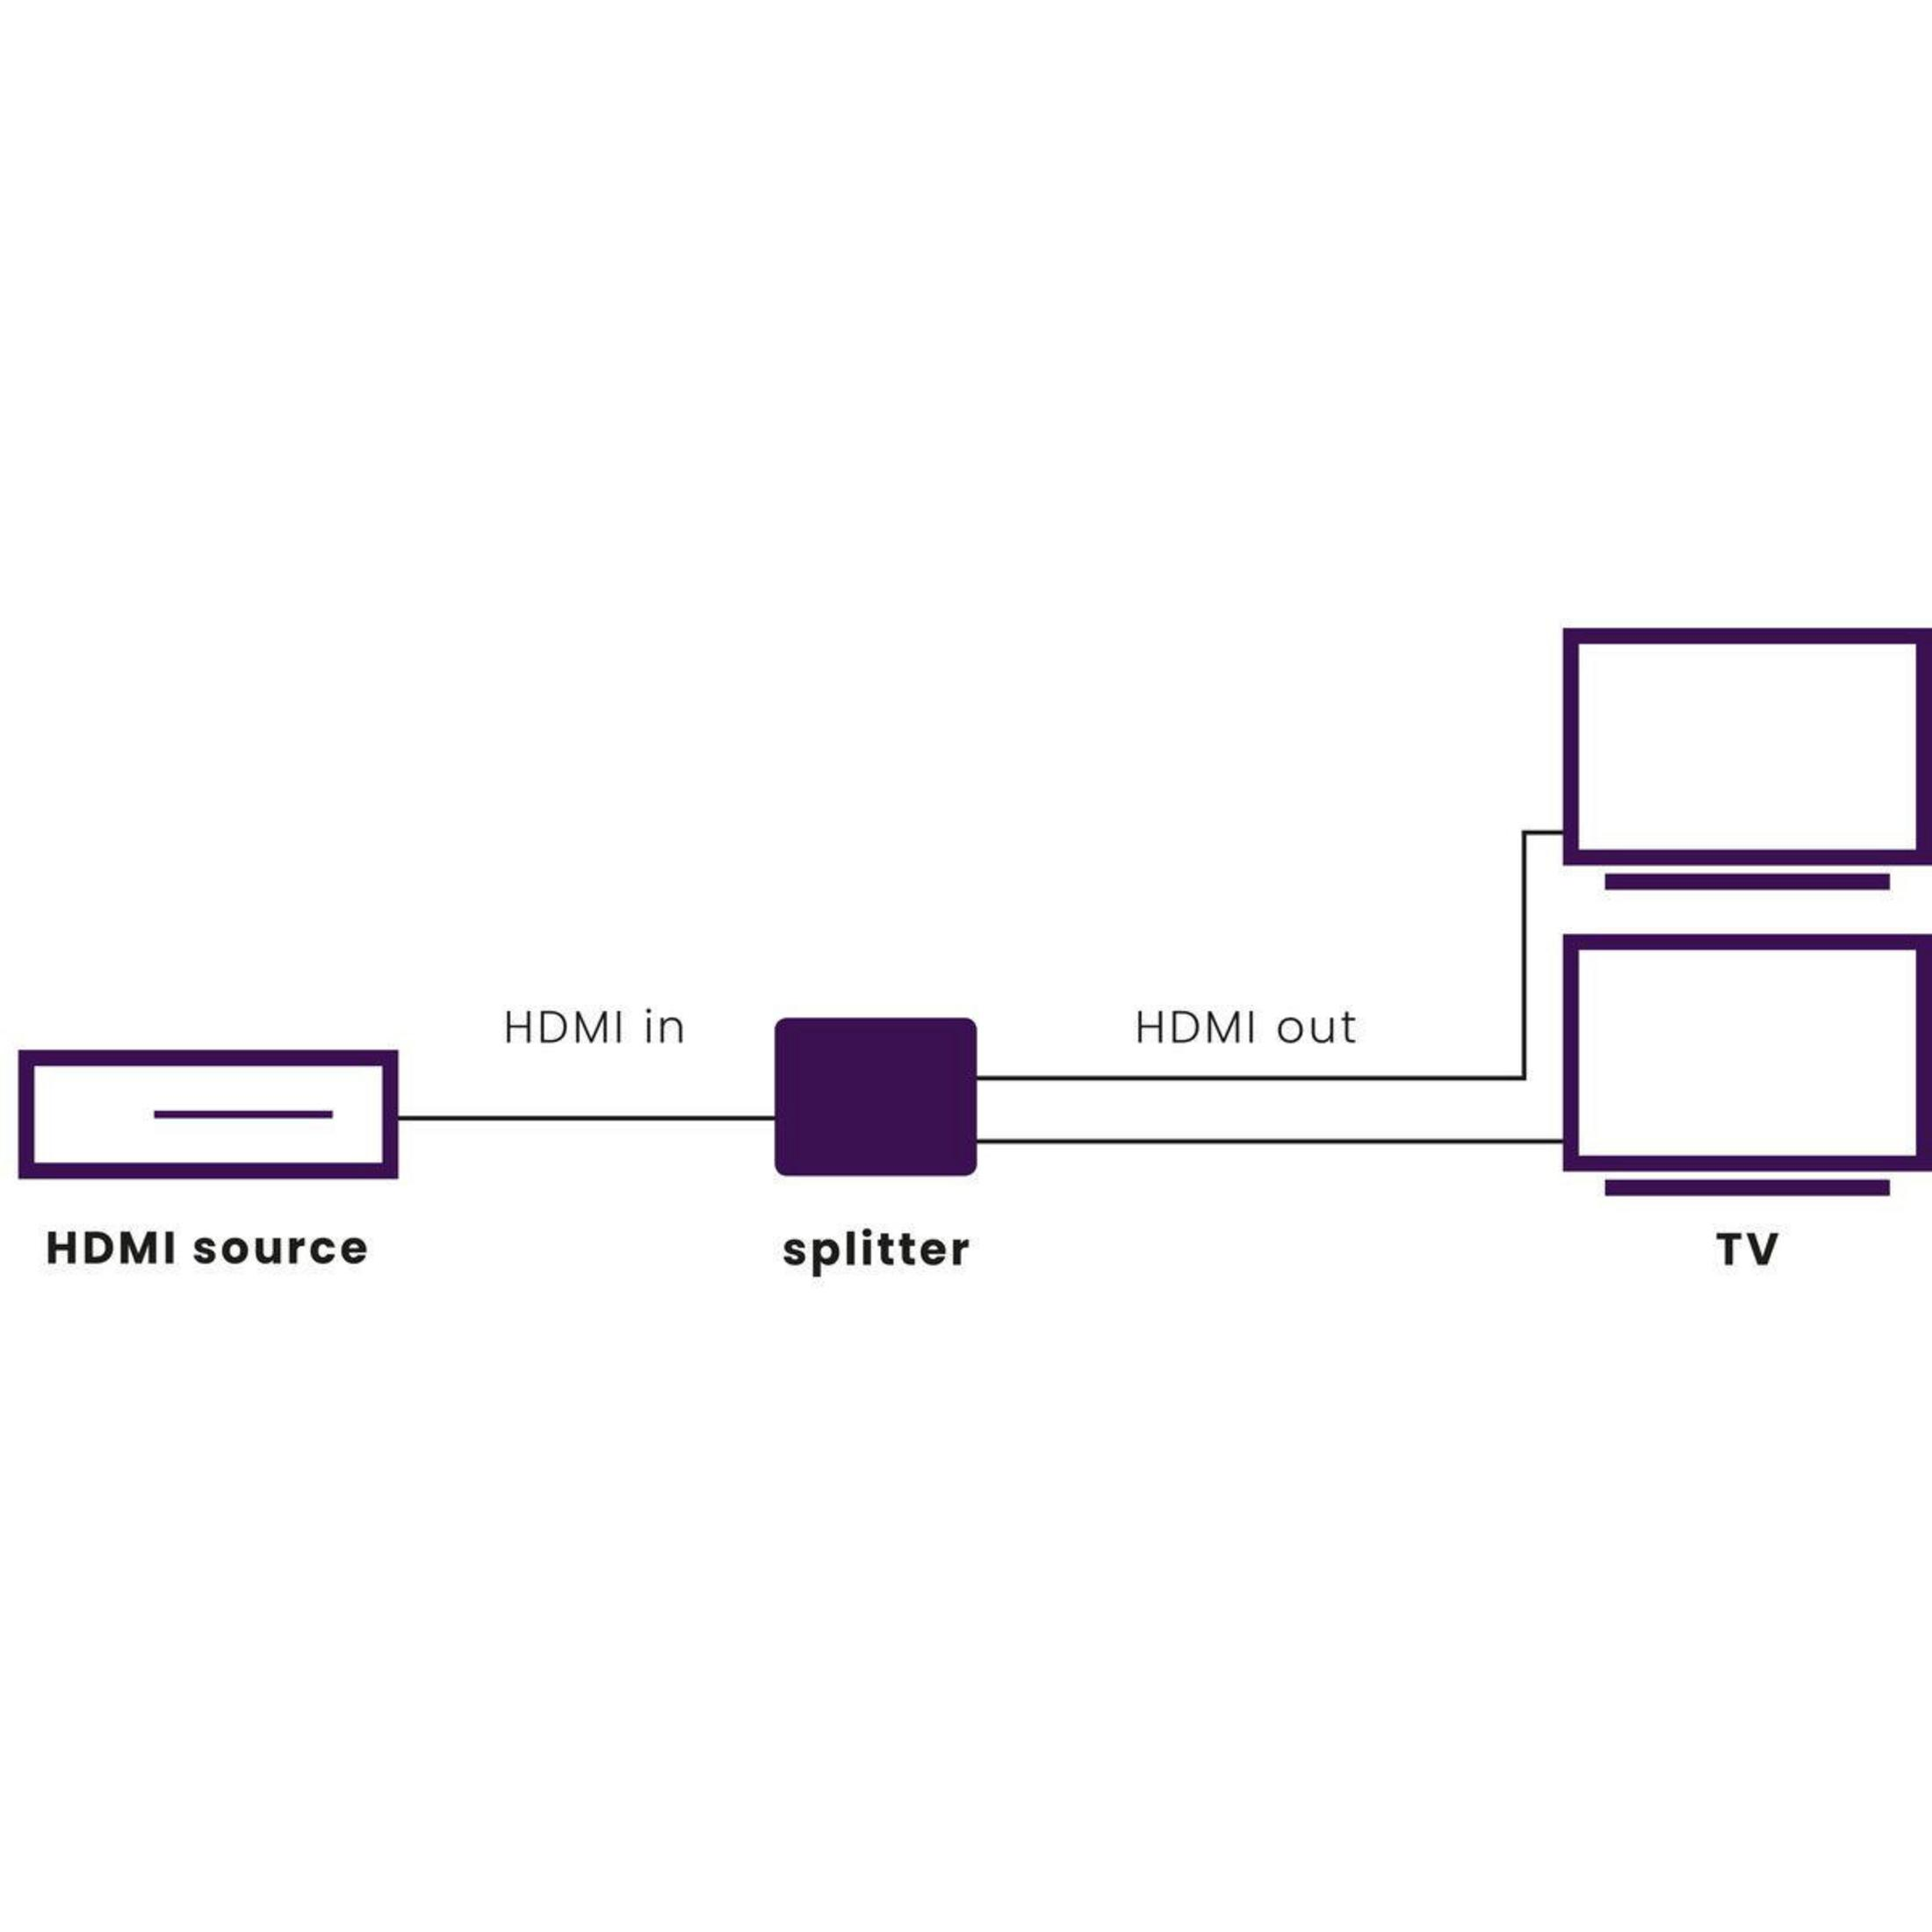 HDMI 312 SPLIT Splitter UHD MARMITEK